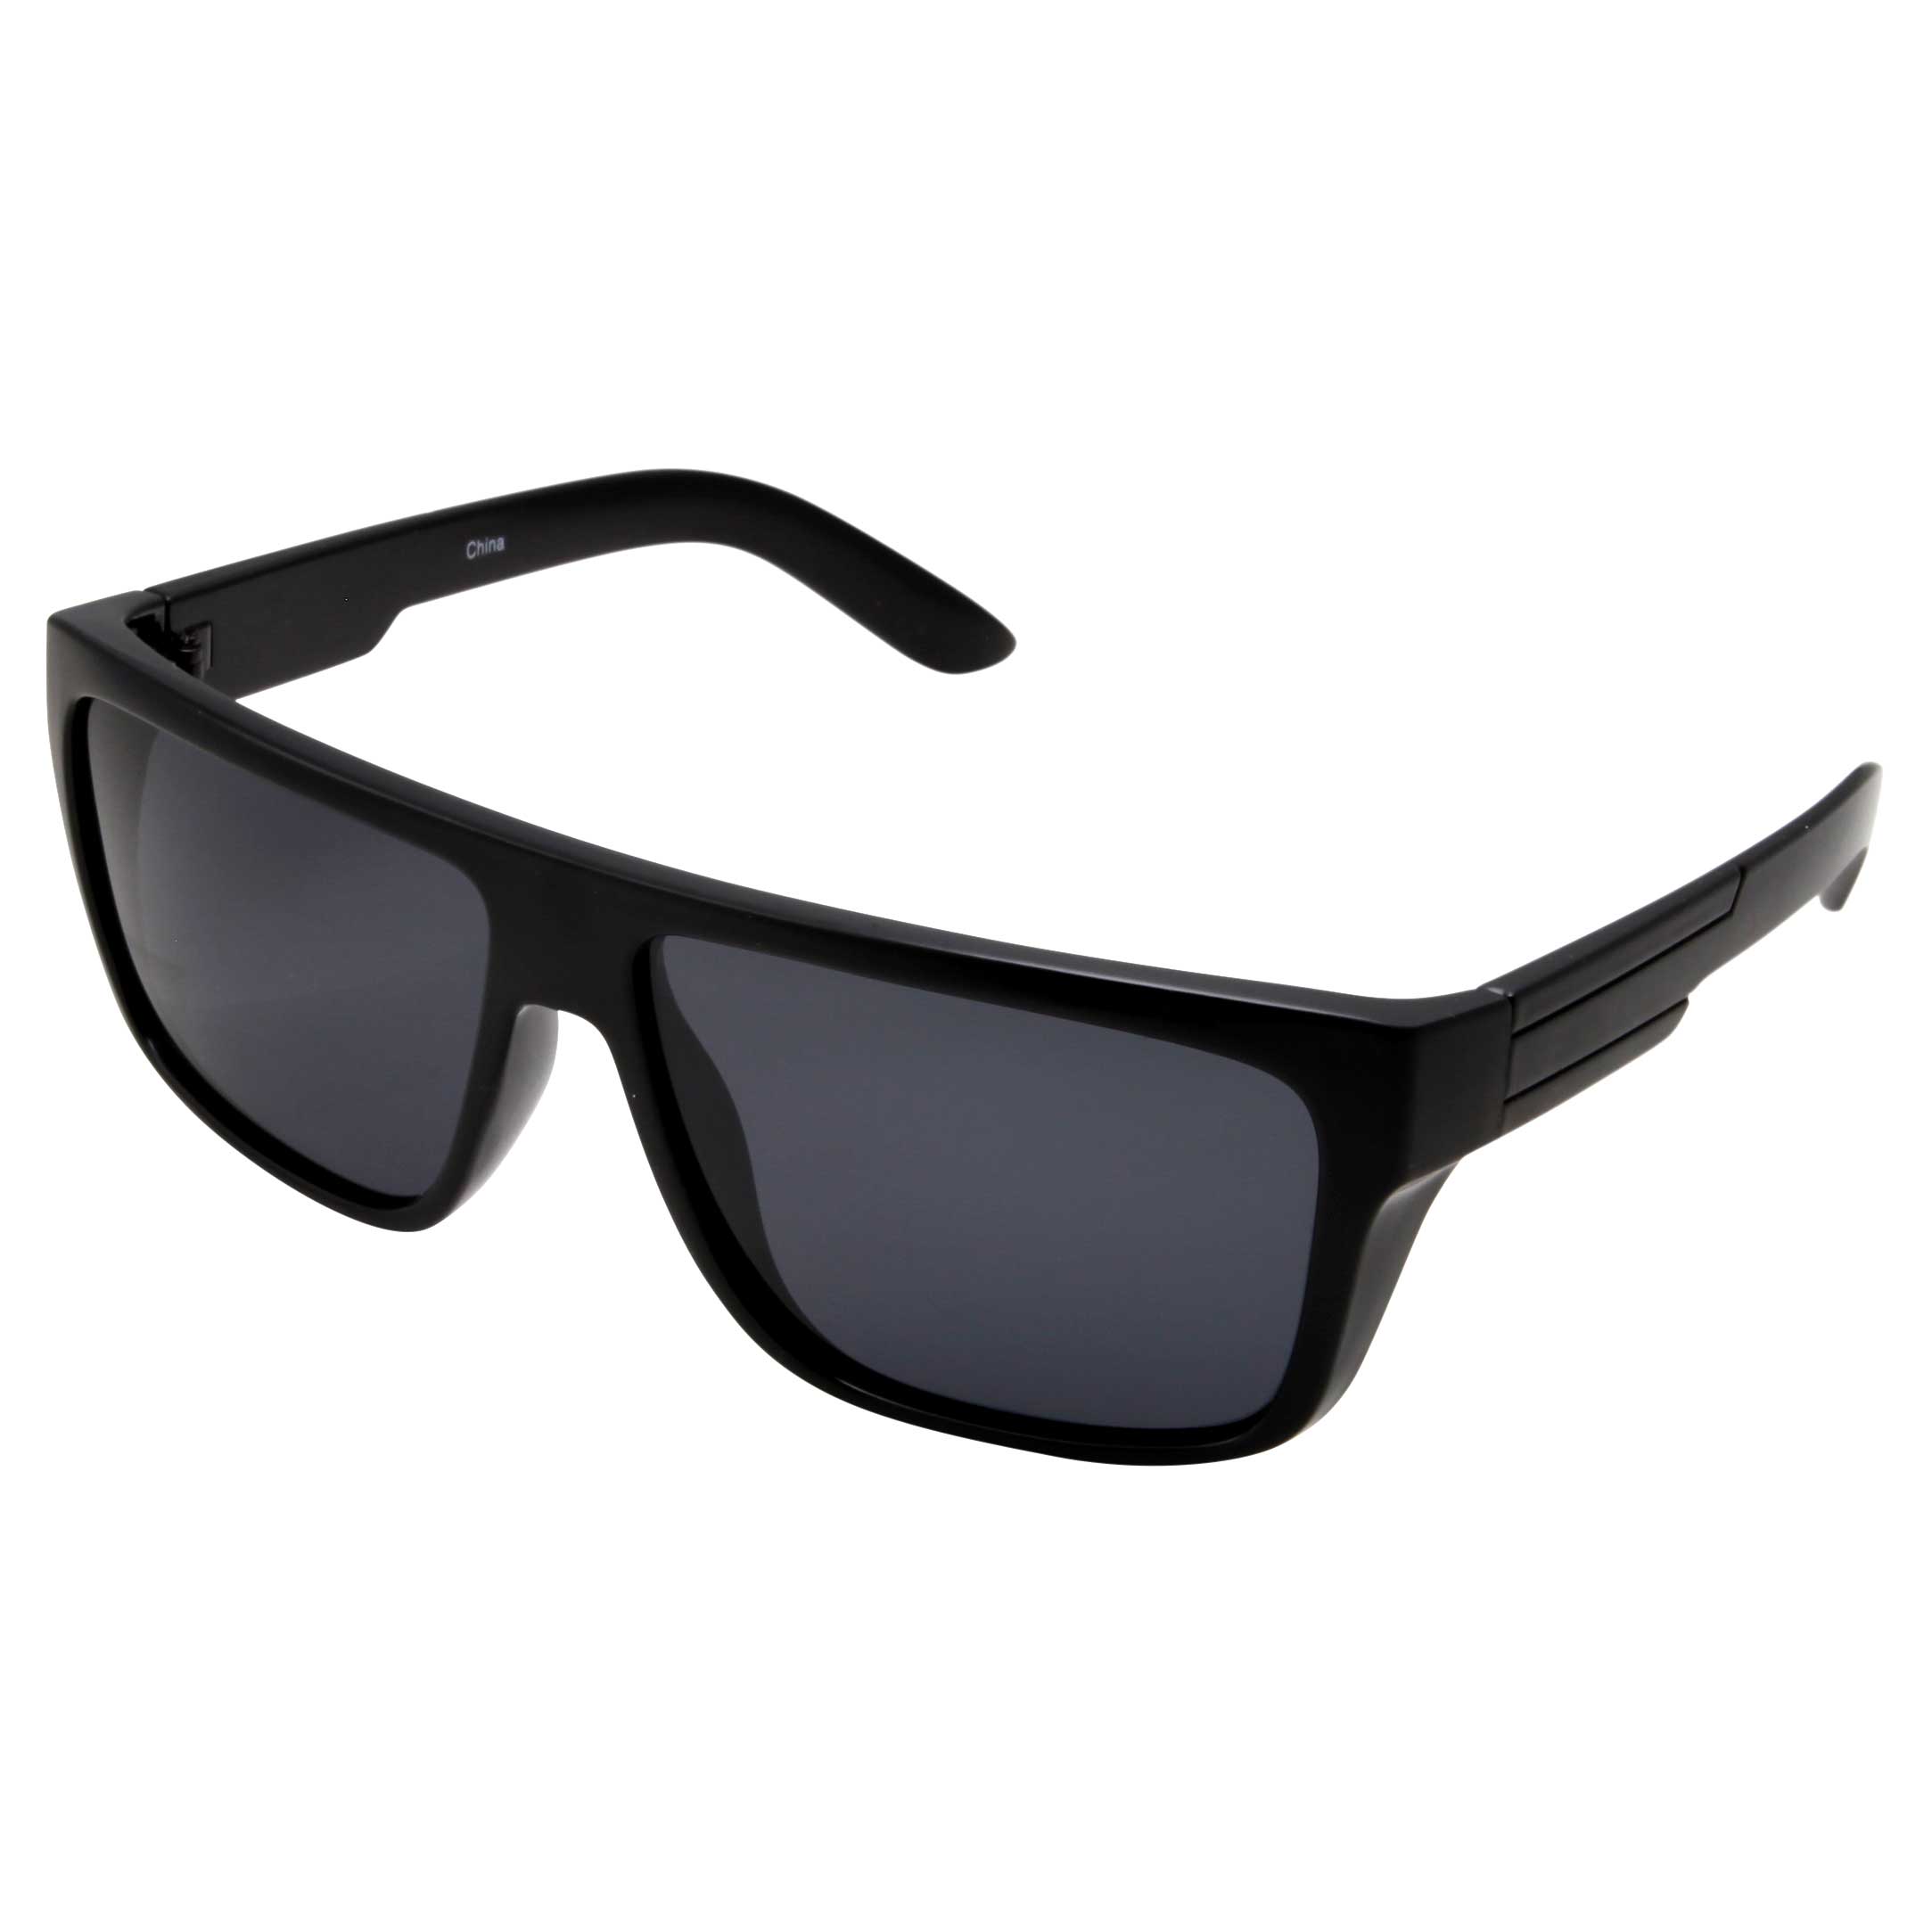 grinderPUNCH Men’s Polarized Lens Flat Top Lifestyle Sunglasses Black Frame - image 1 of 6